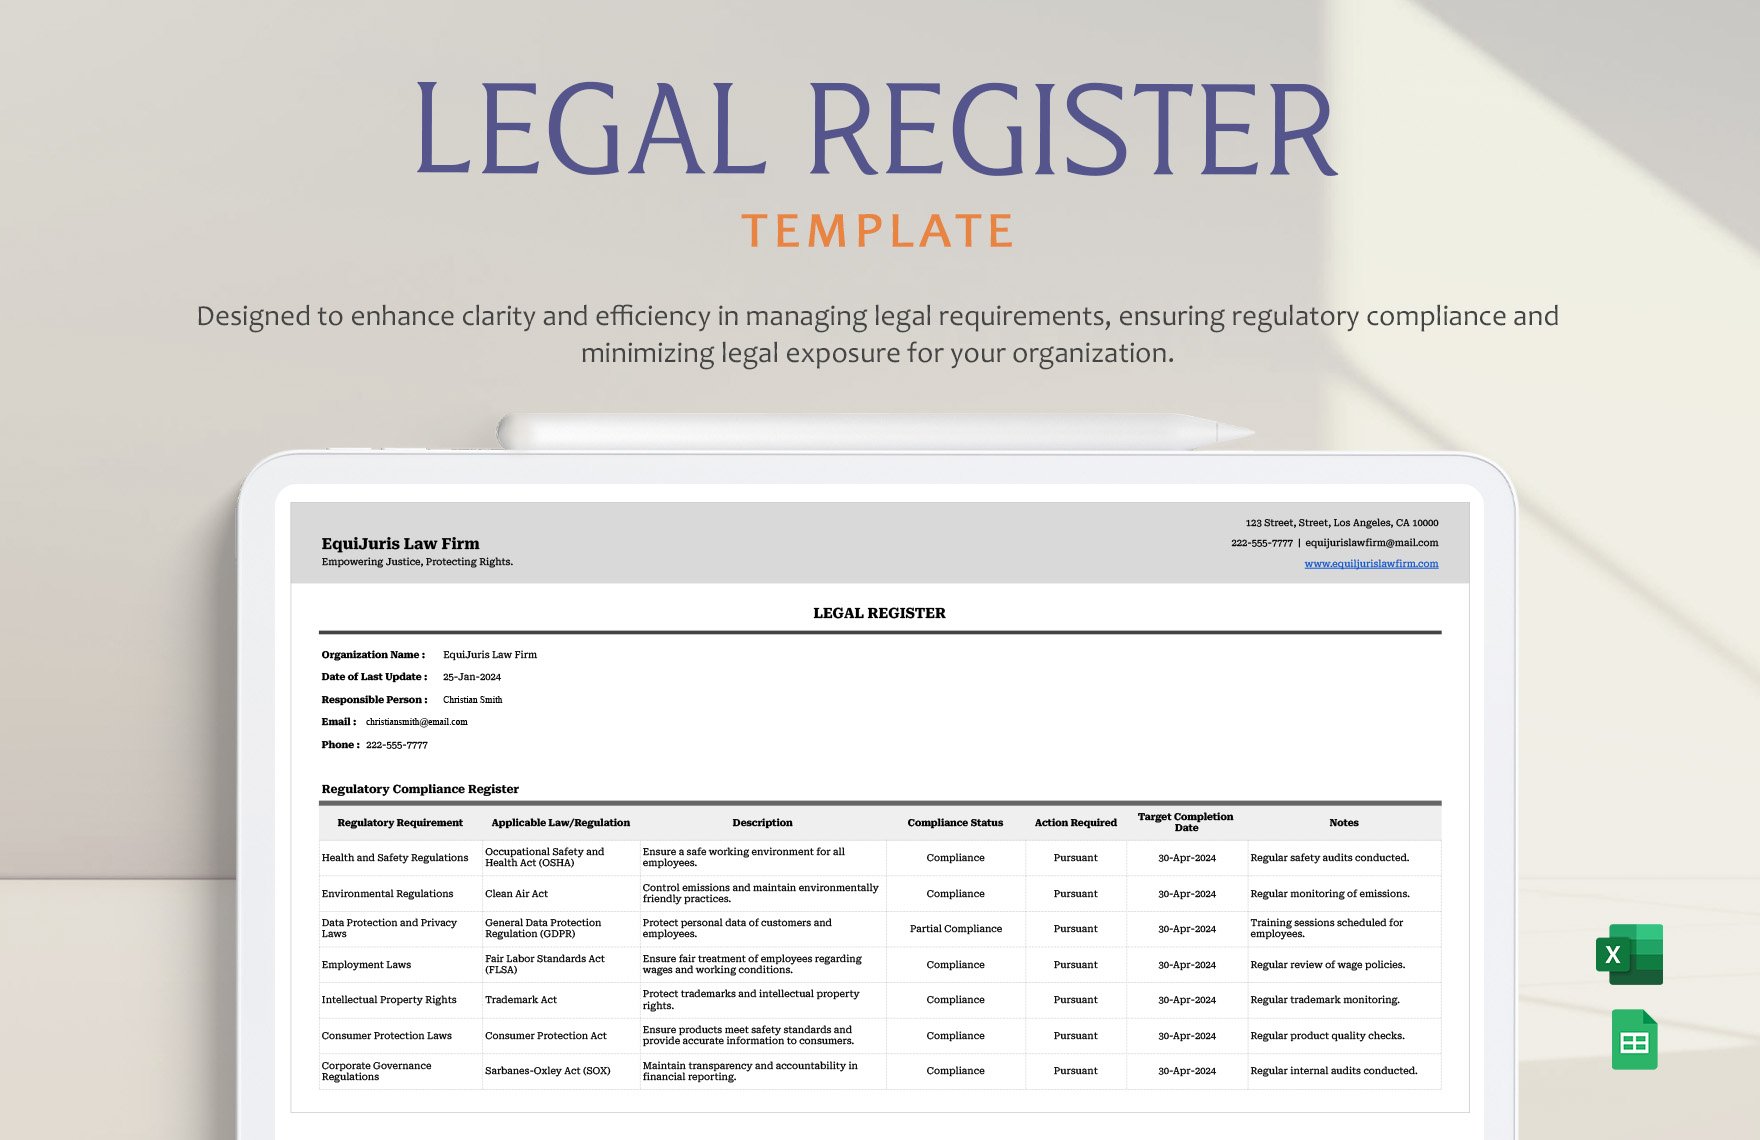 Legal Register Template in Excel, Google Sheets